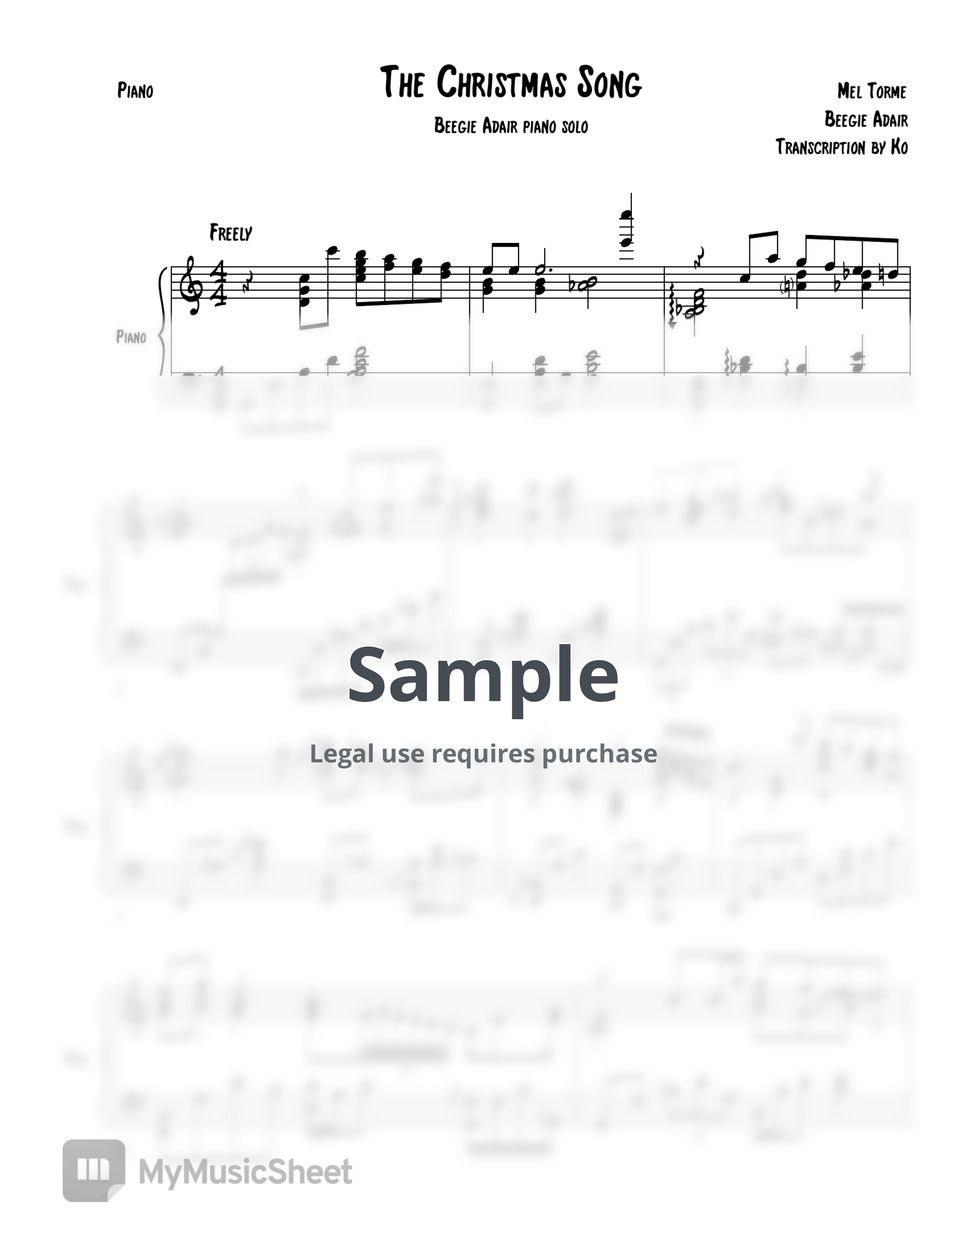 Mel Tormé - The Christmas Song (Beegie Adair / ピアノ / ジャズピアノ / Jazz / Jazz Piano / クリスマス) by Ko